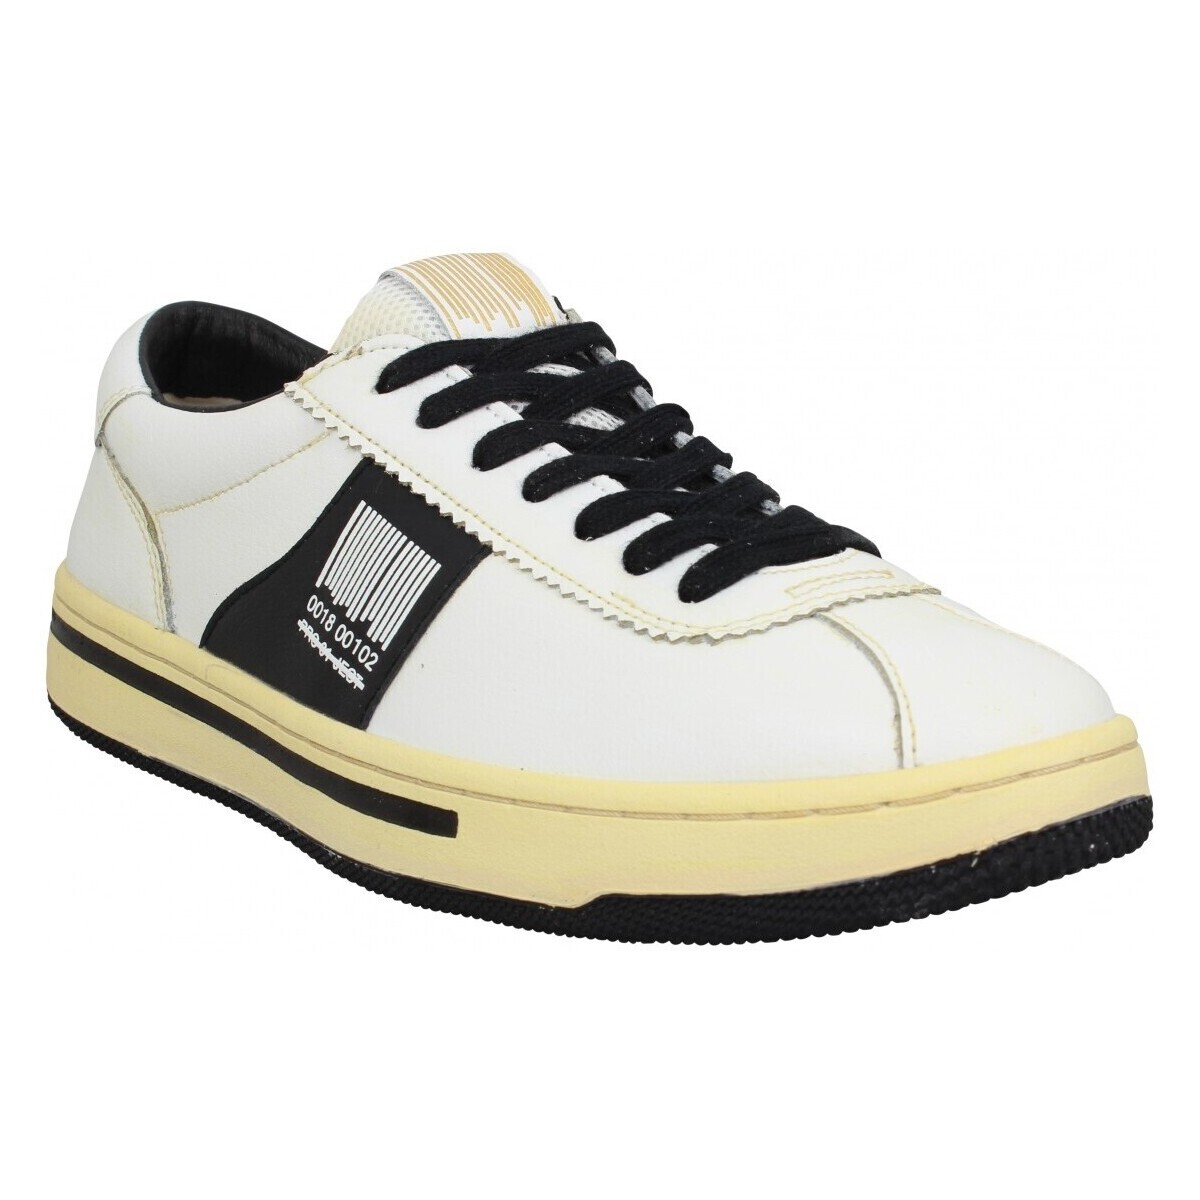 Schuhe Herren Sneaker Pro 01 Ject P5lm Cuir Homme Blanc Noir Weiss